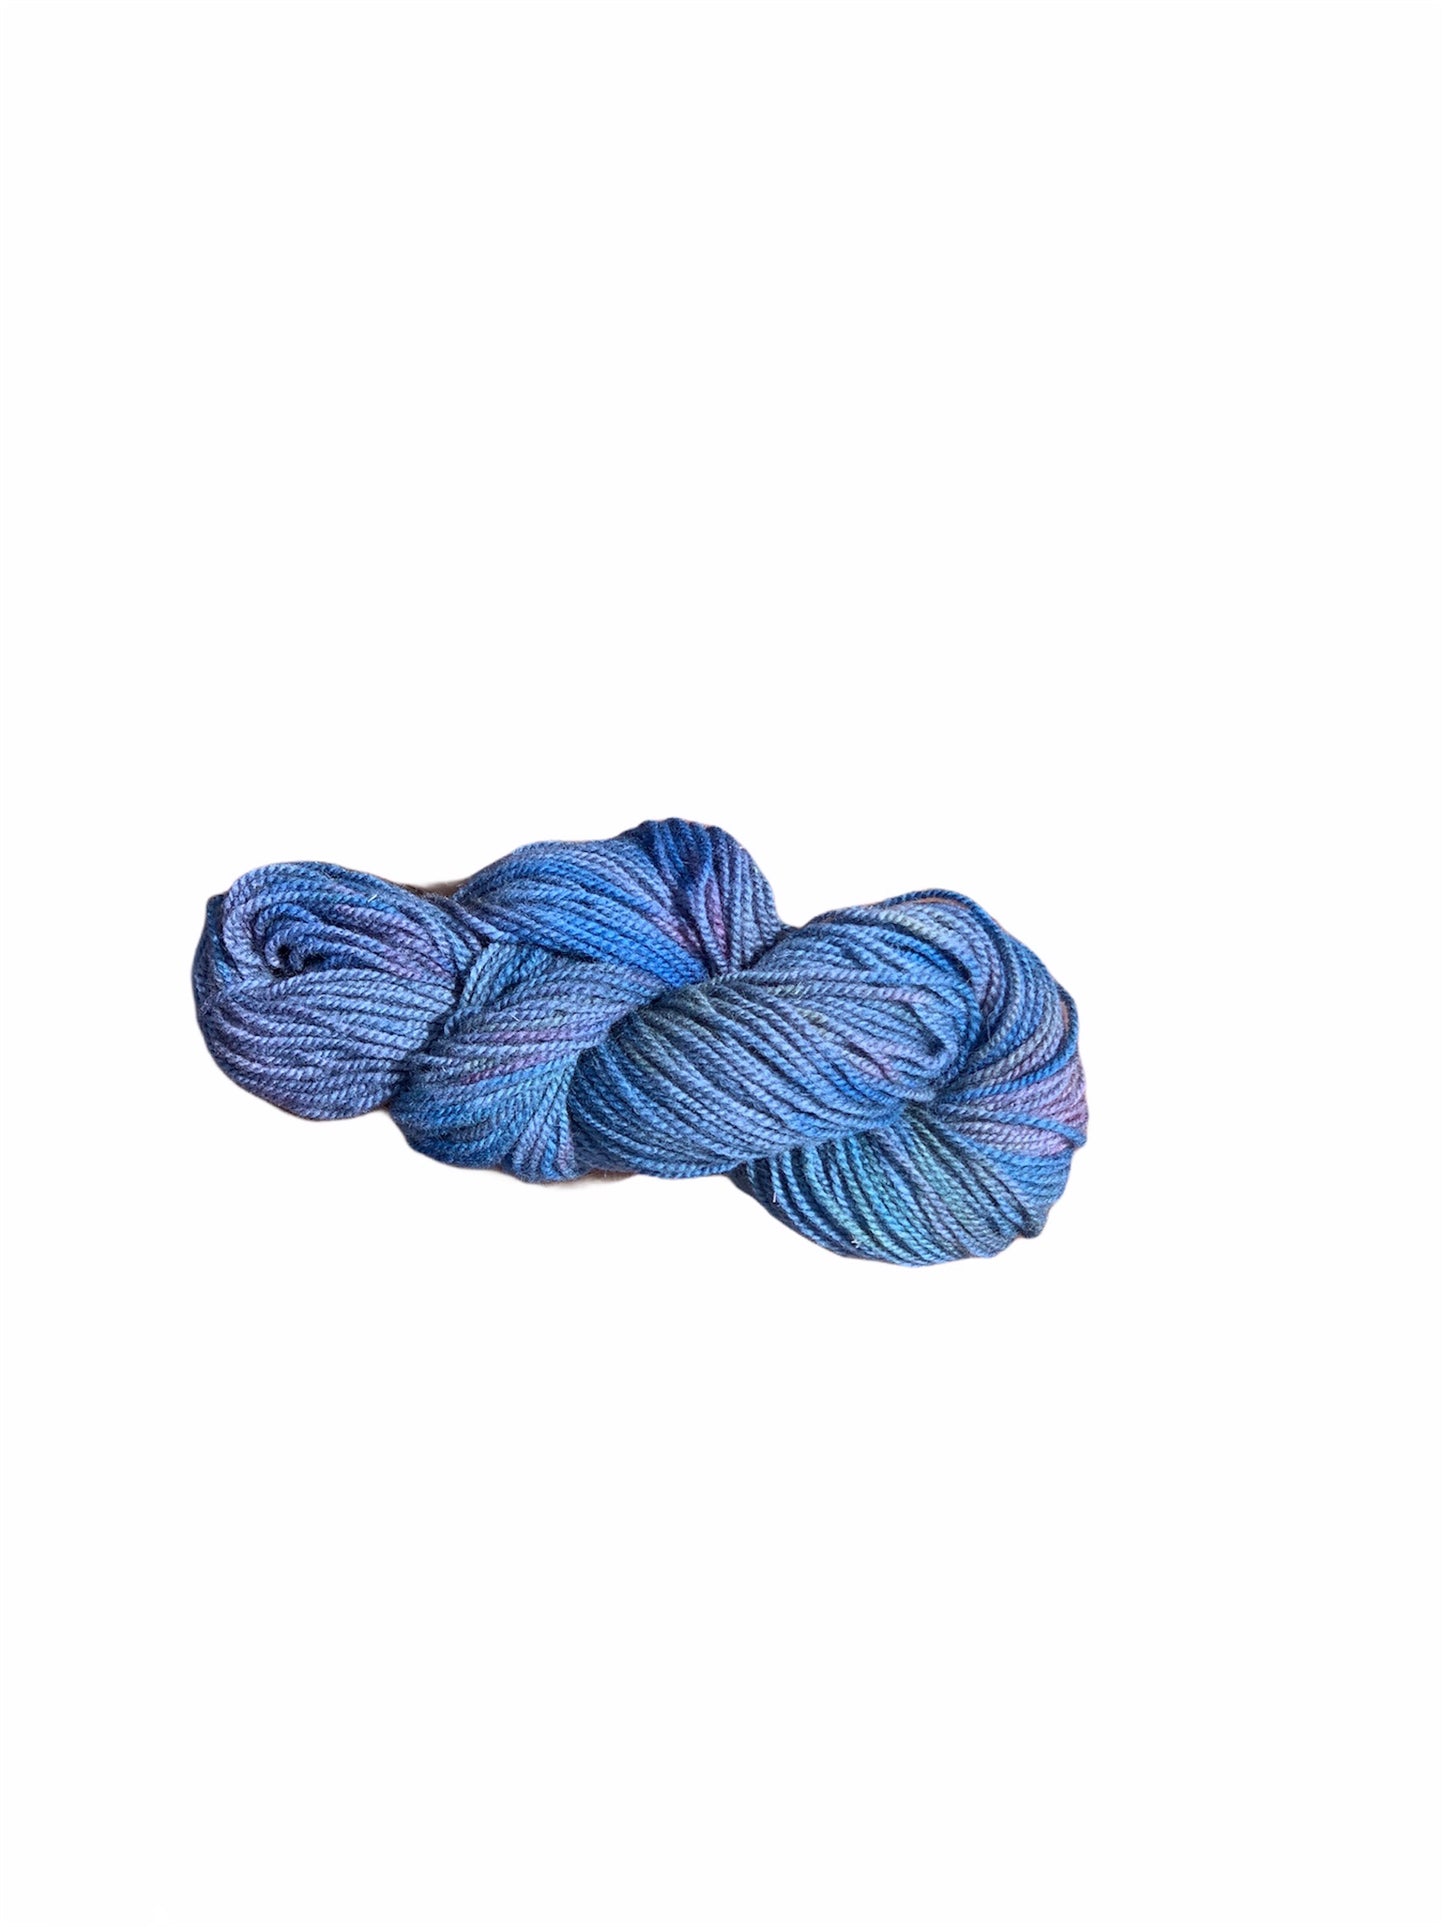 Indigo Studio Dyed Yarn